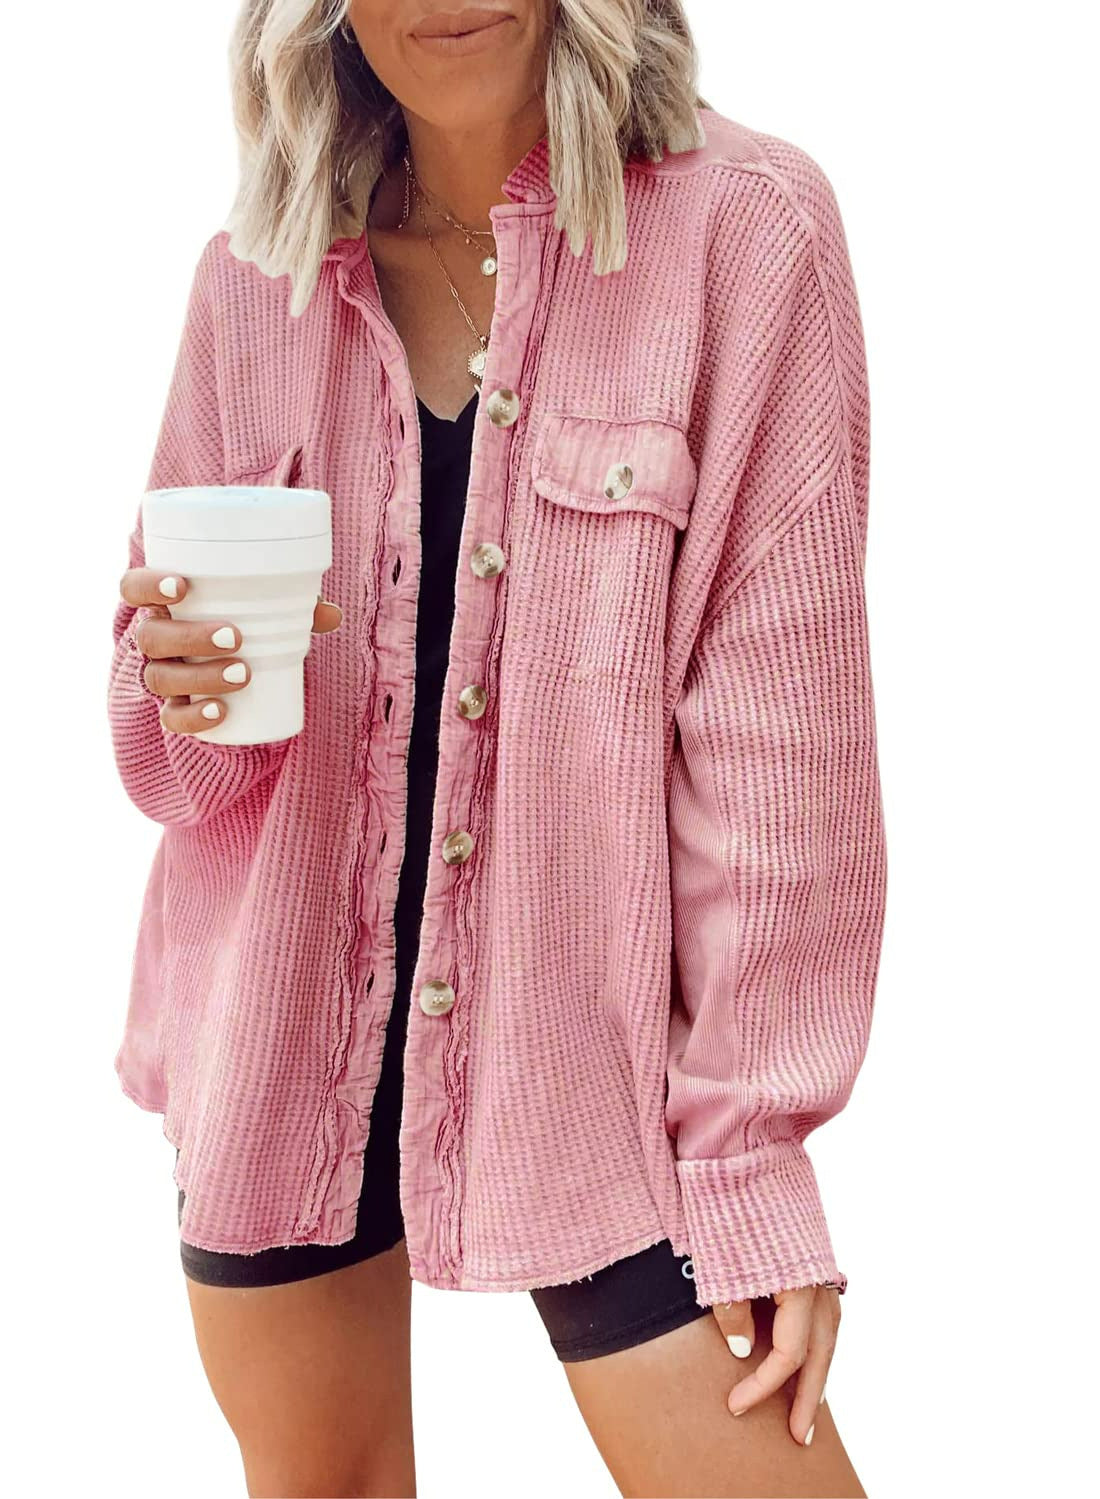 Shirt  | Button Shirt Jacket Women Lapel Long Sleeve Blouse Fashion Jacket Tops | Pink |  L| thecurvestory.myshopify.com